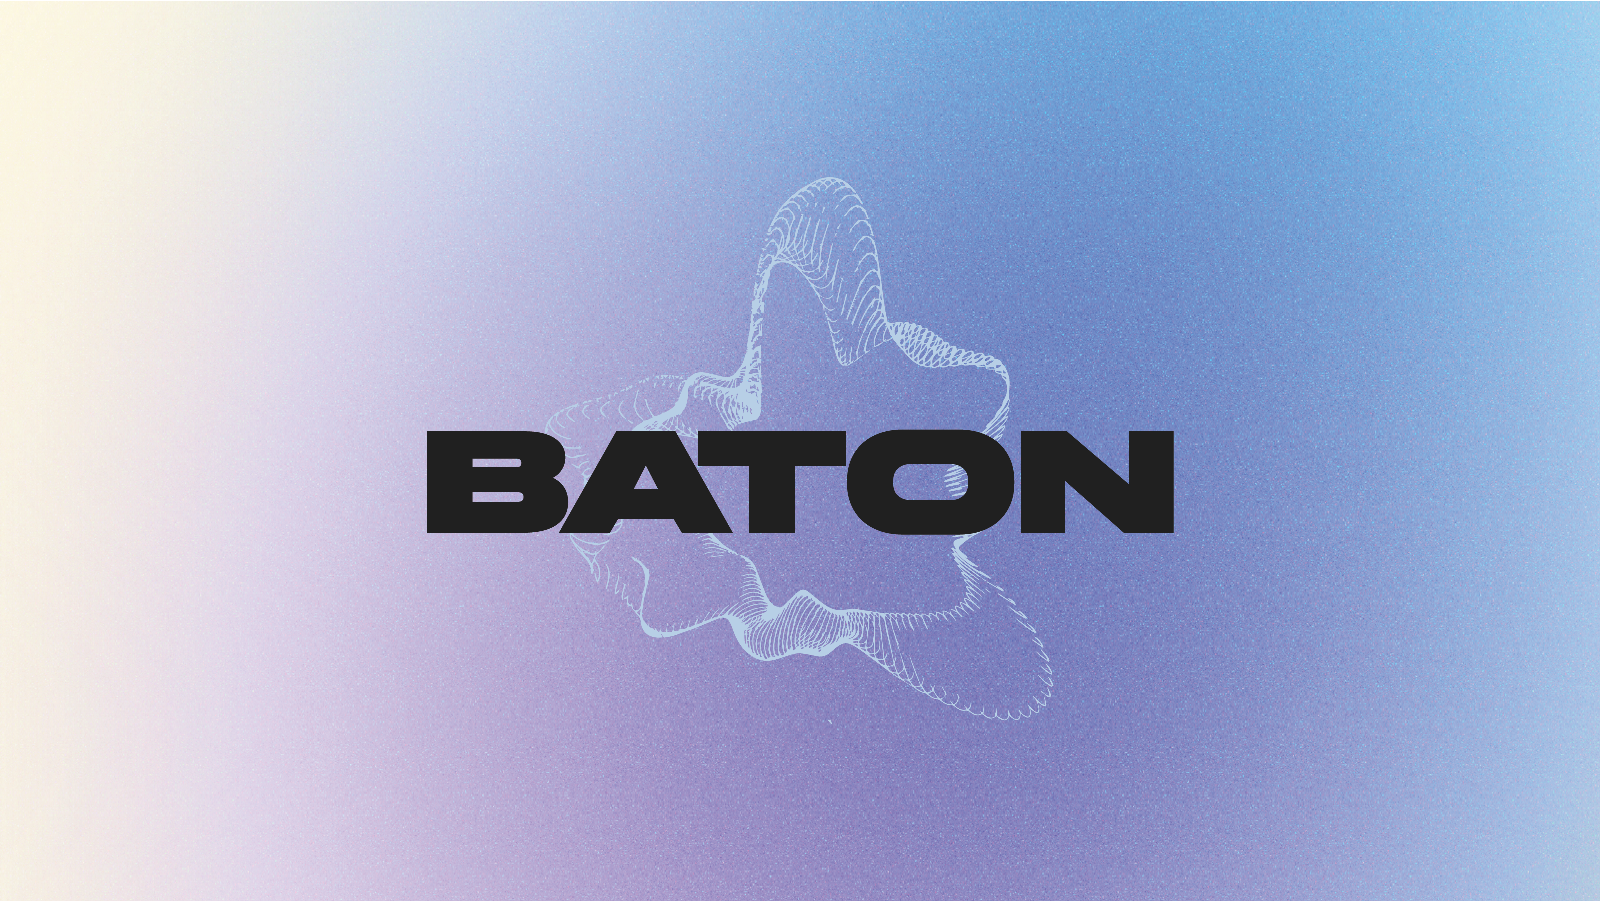 Baton, a music collaboration platform for unreleased material, raises $4.2M